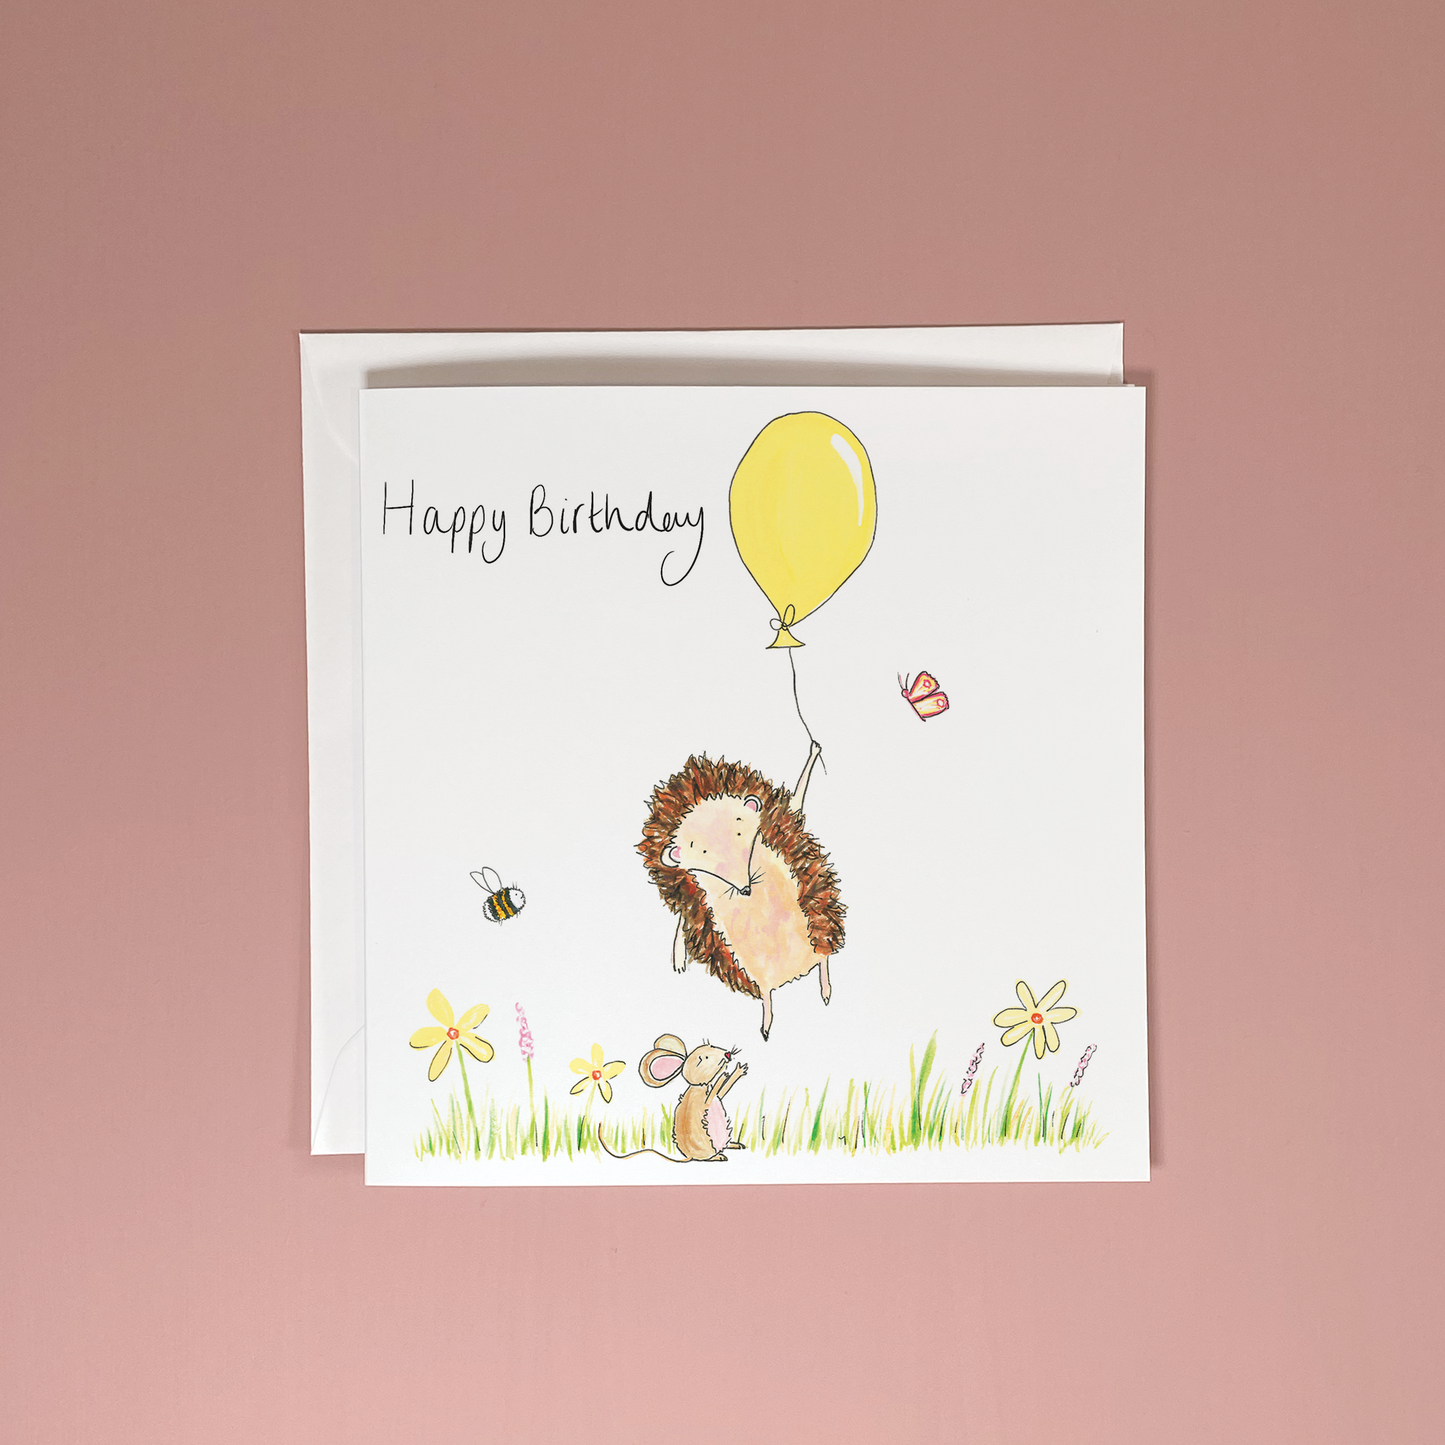 Happy birthday Balloon Card